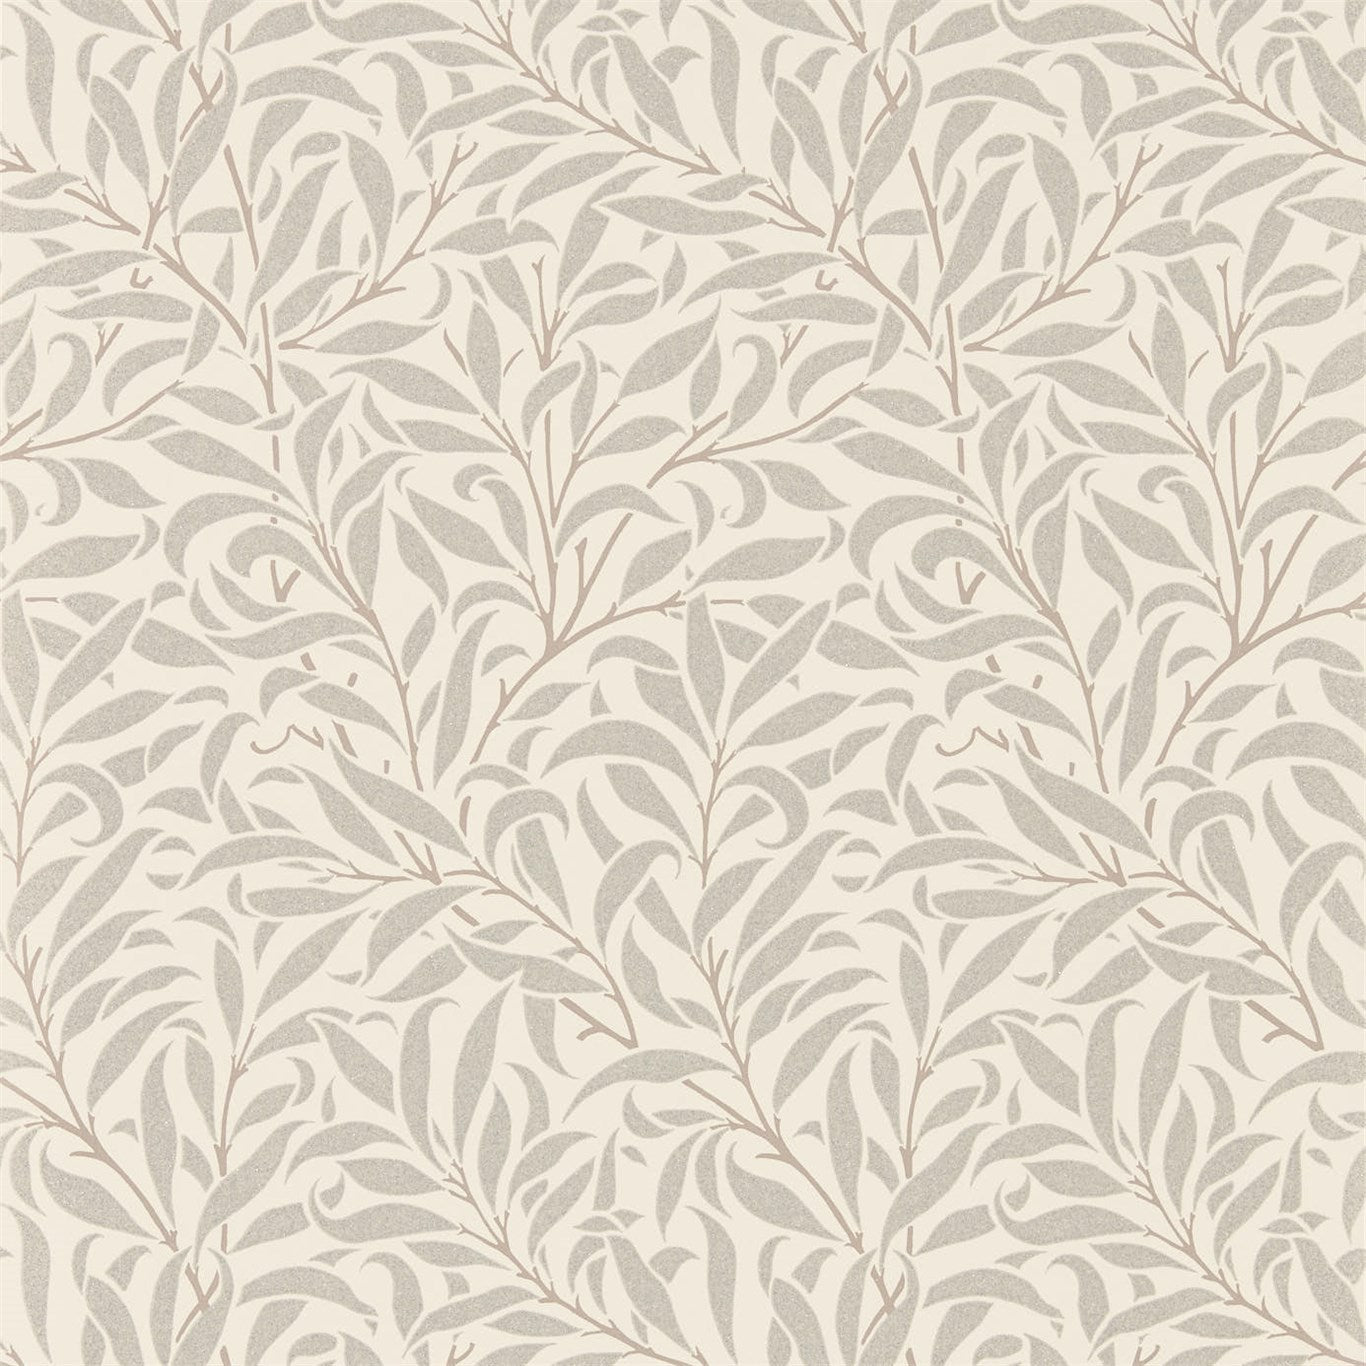 Pure Willow Bough Ecru/Silver Wallpaper DMPU216023 by Morris & Co